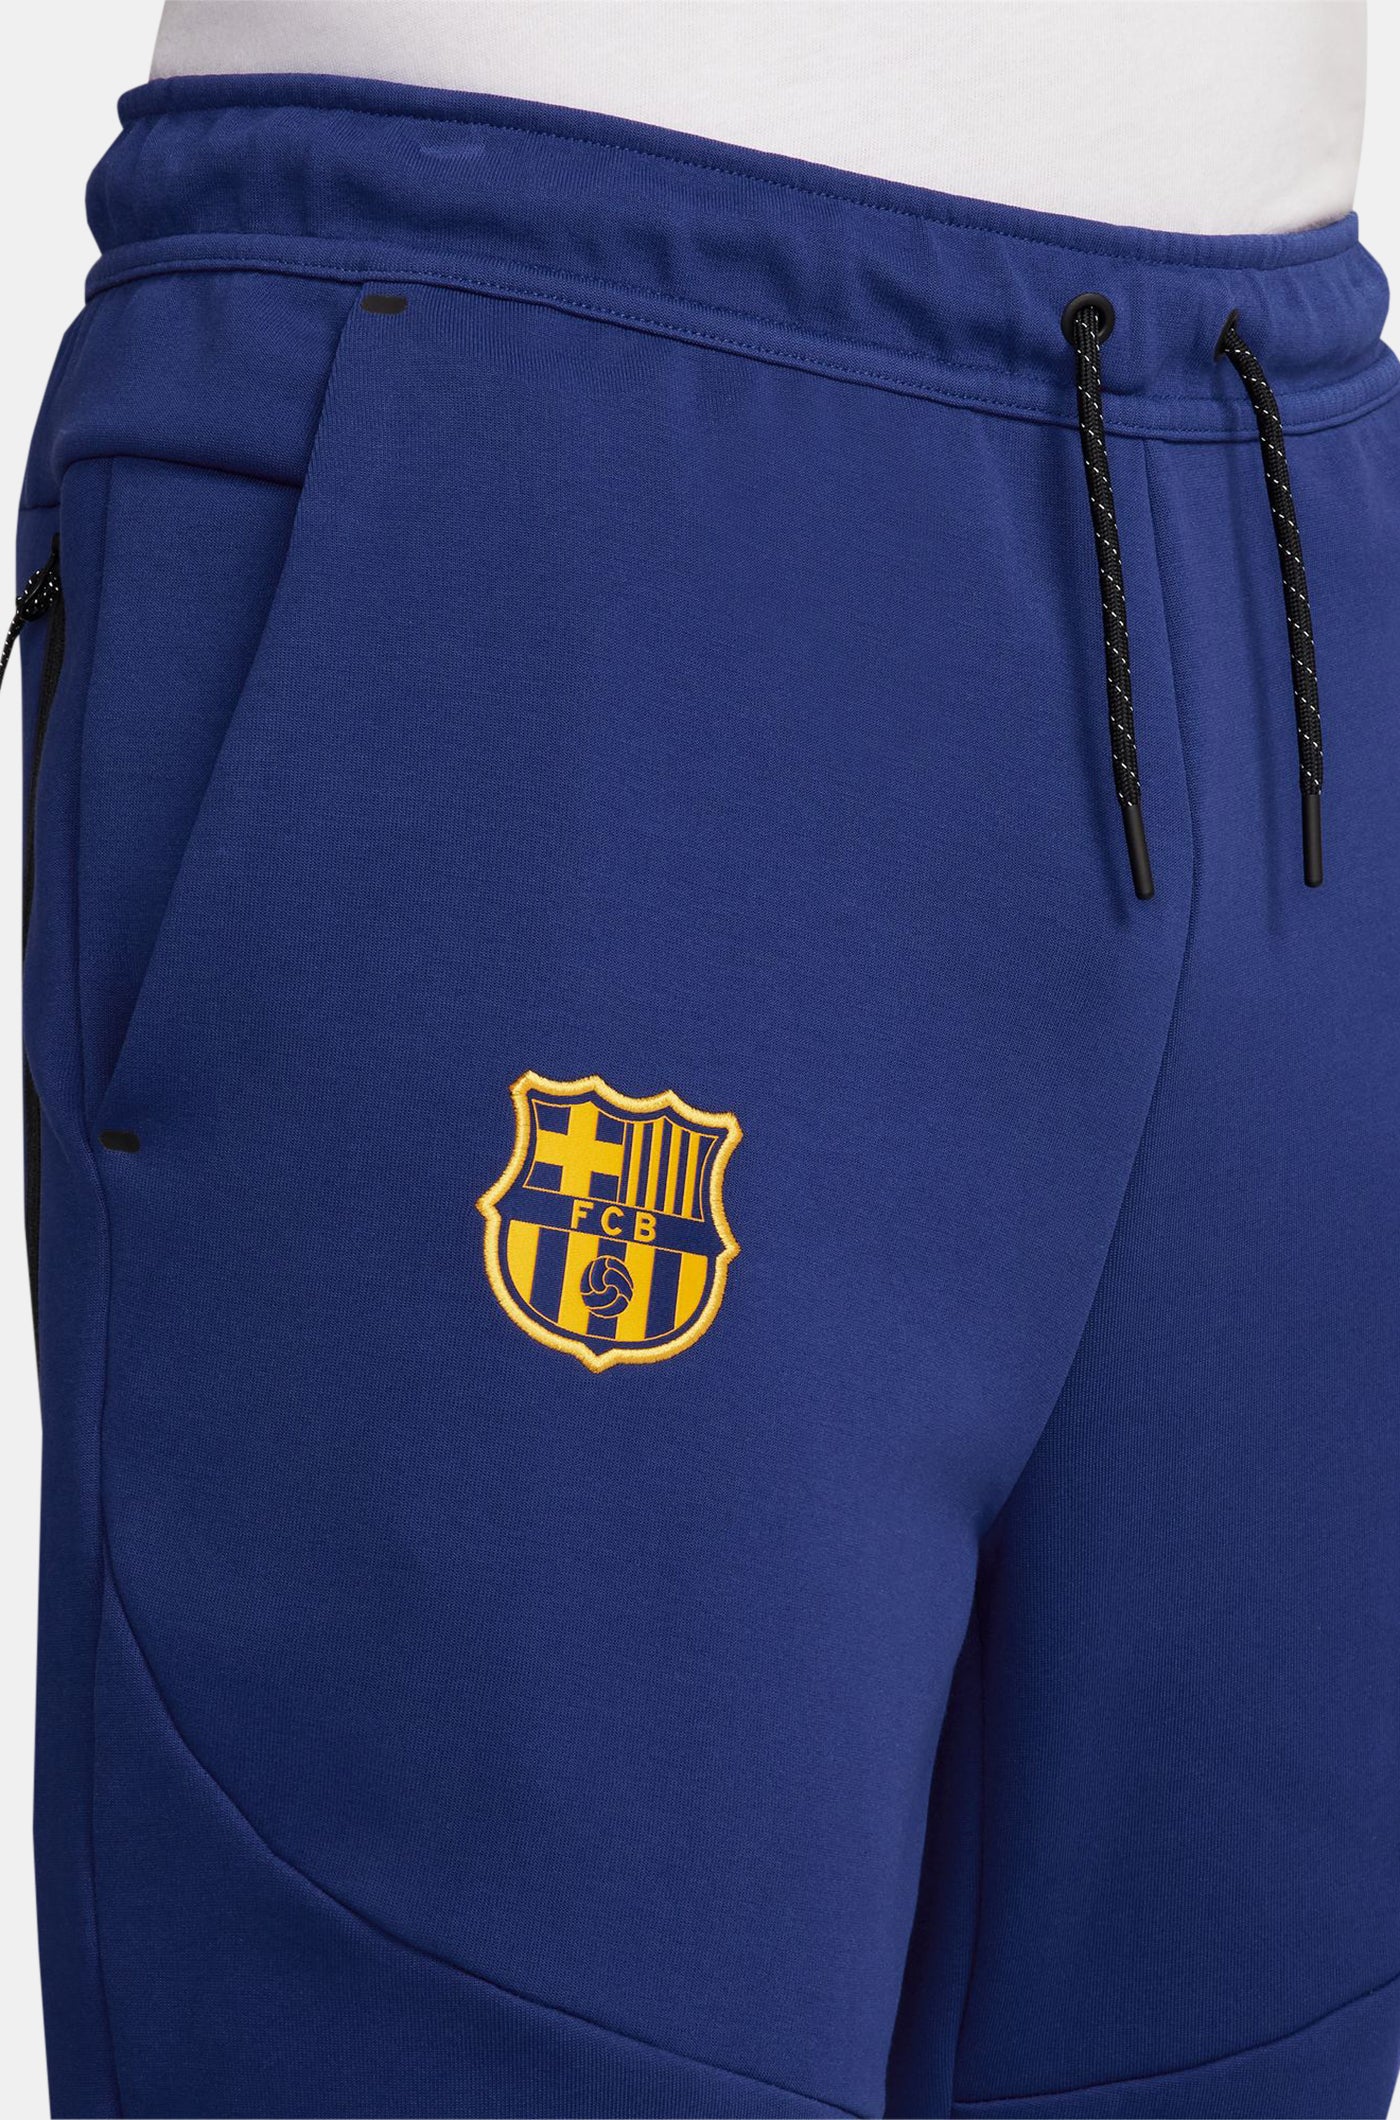 Pant tech blue royal Barça Nike – Barça Official Store Spotify Camp Nou